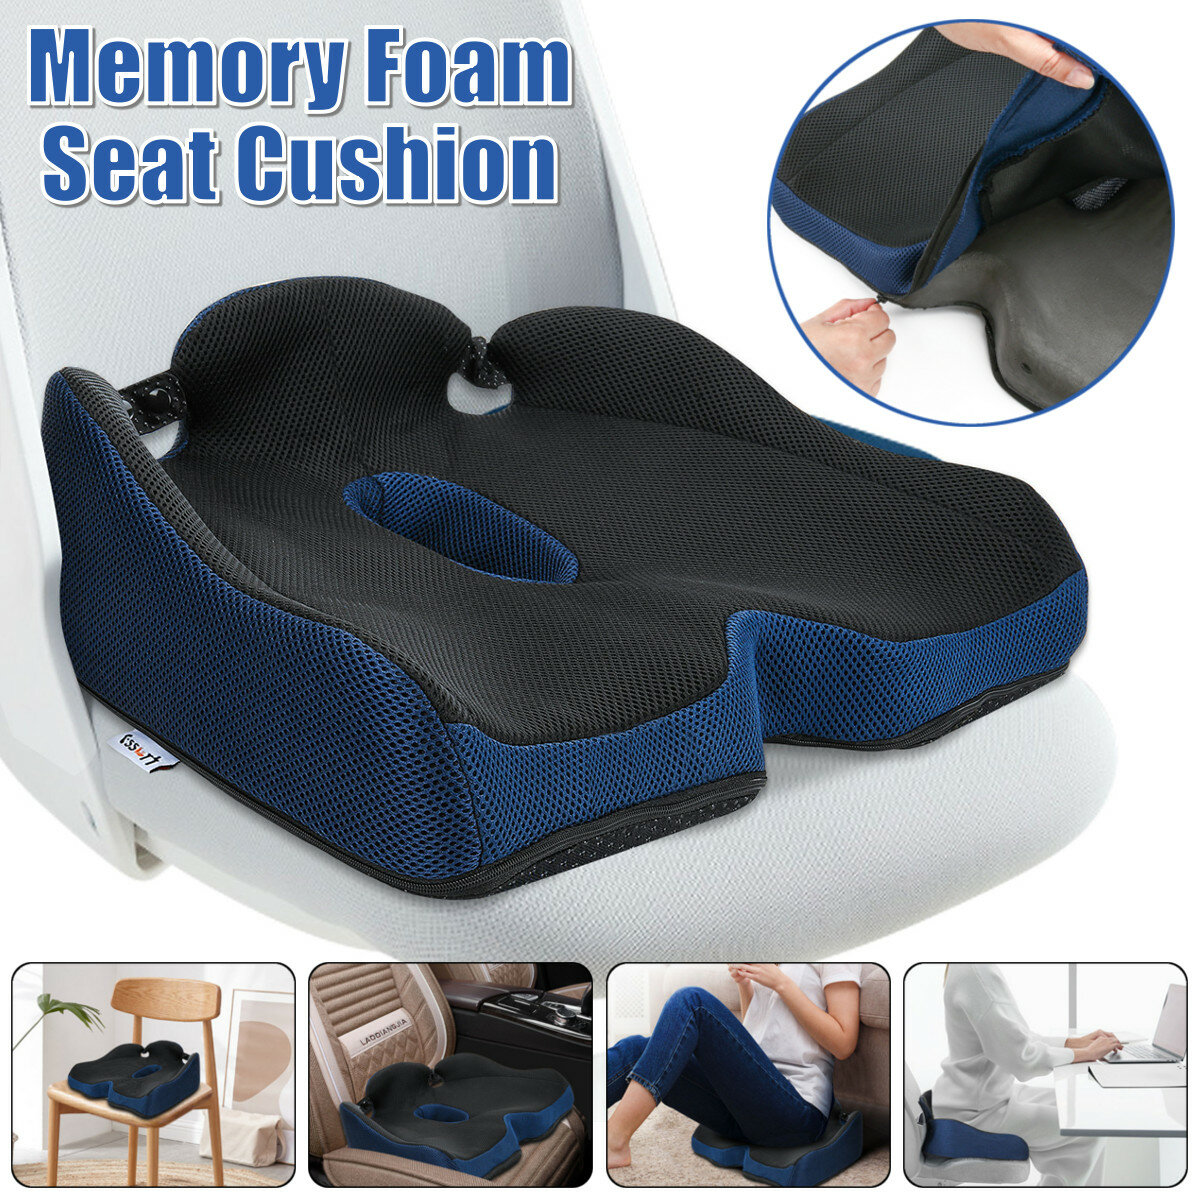 Image of ESSORT Seat Cushion Ergonomic Memory Foam Seat Cushion Washable Comfort Seat Cushion